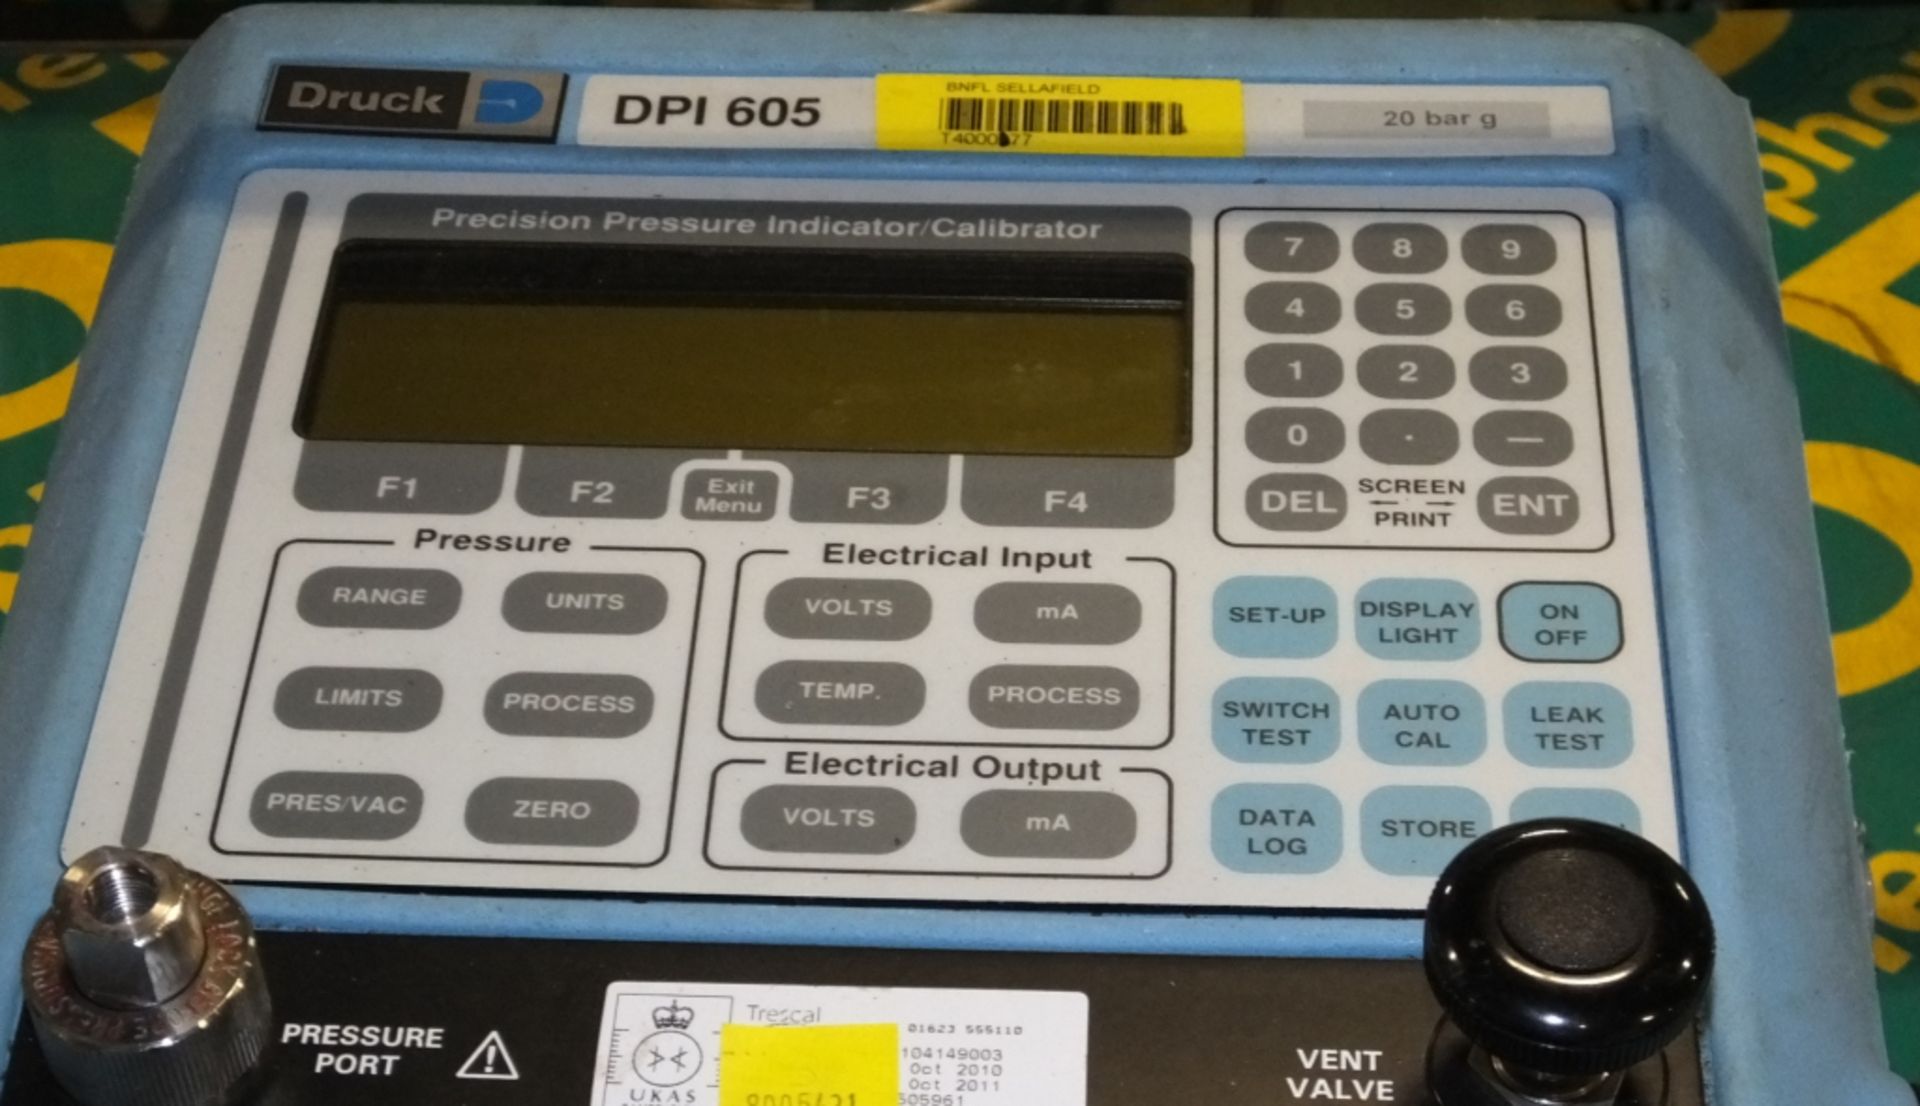 Druck DPI 605 20bar G digital pressure indicator - Image 2 of 2